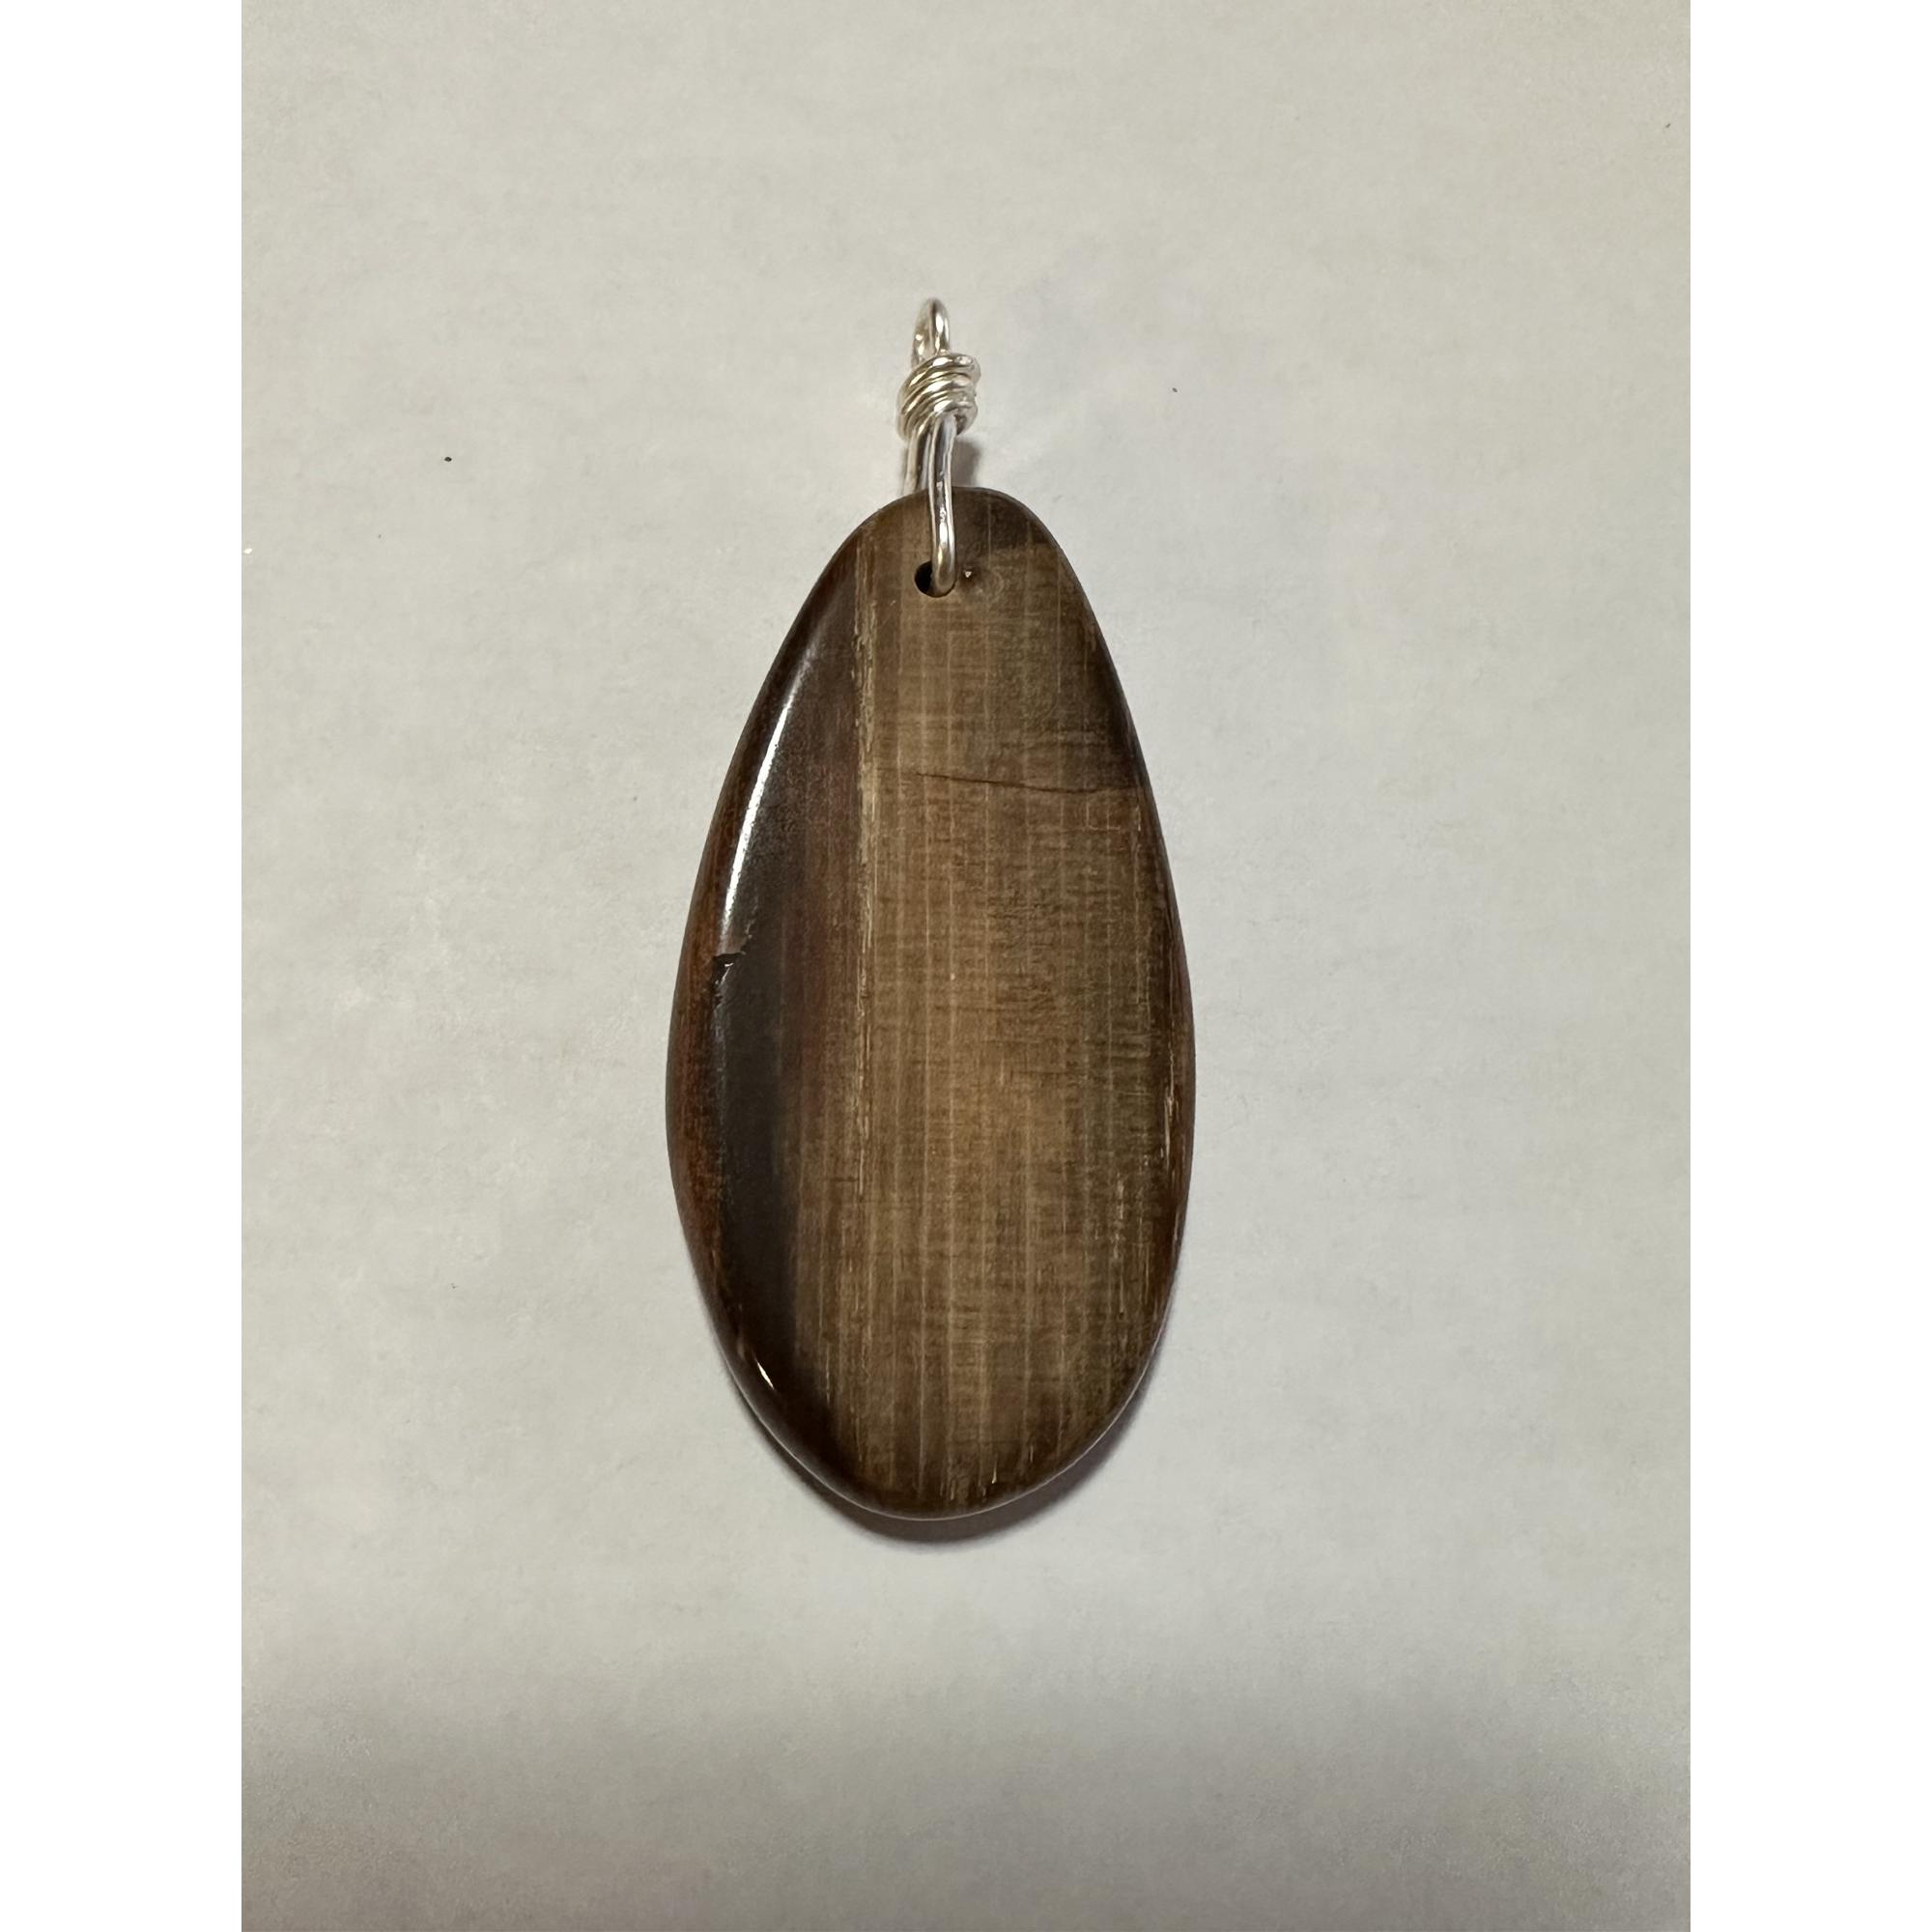 Petrified wood pendant, Oregon, hand polished Prehistoric Online